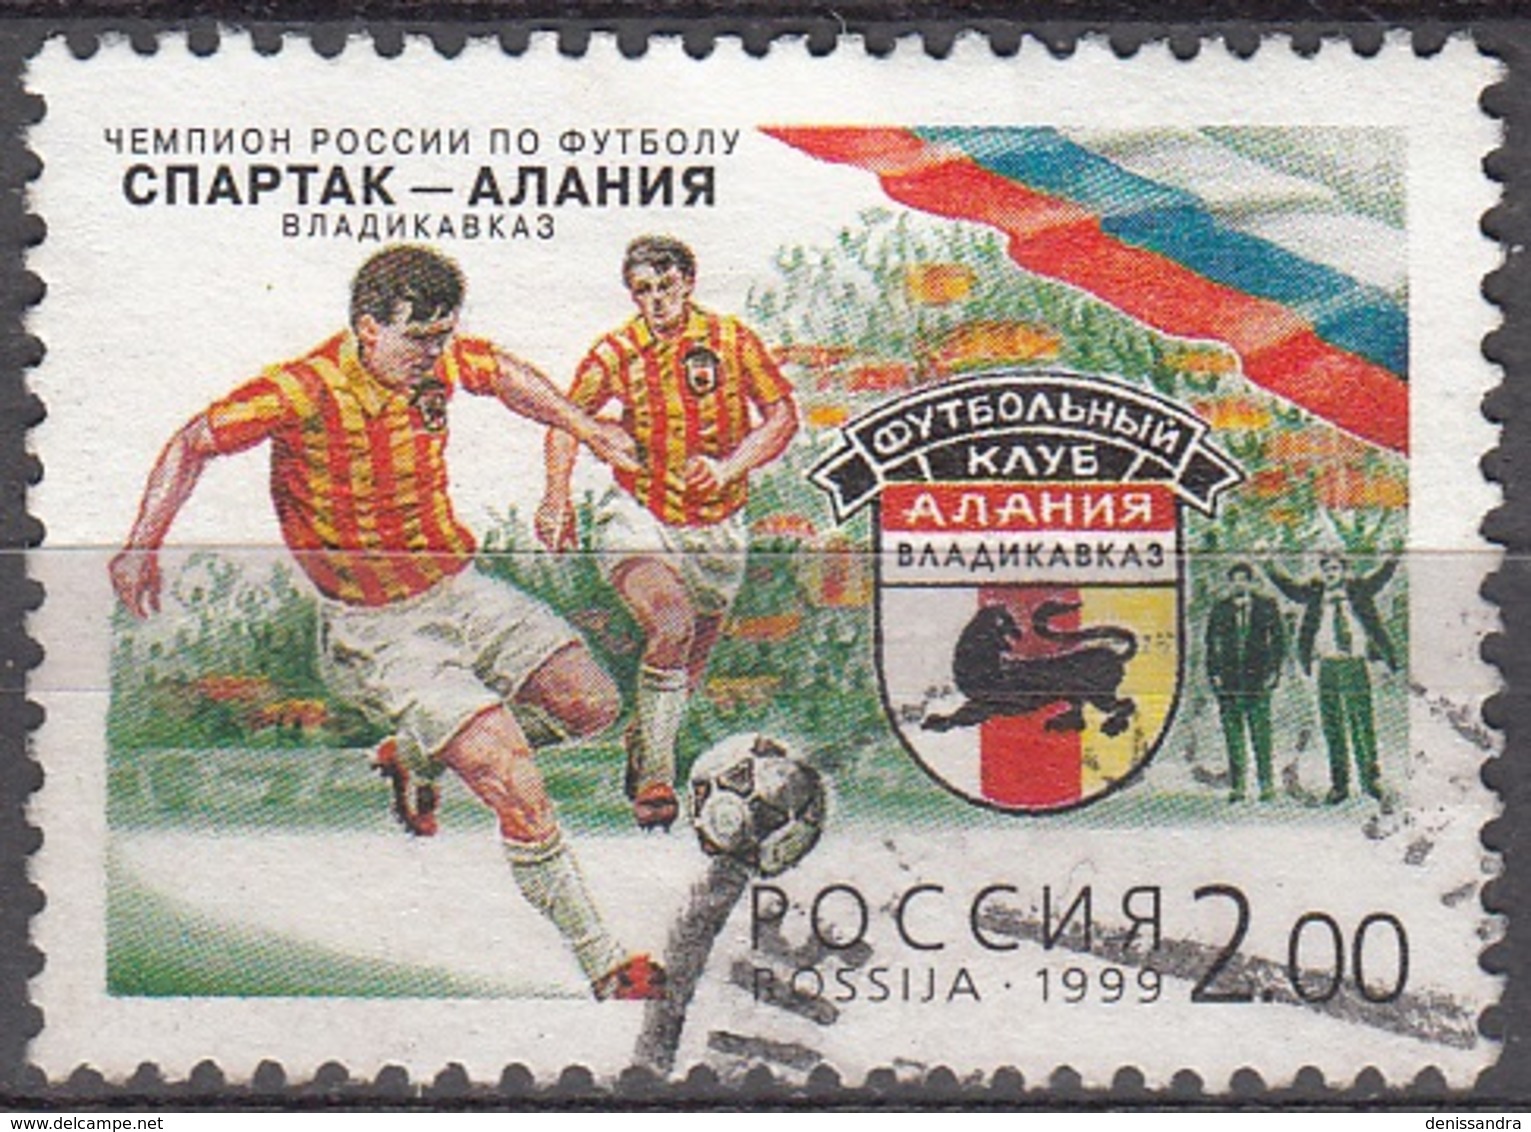 Rossija 1999 Michel 775 O Cote (2008) 0.20 Euro 1995 Spartak-Alania Vladikavkaz Remporte Le Championnat Cachet Rond - Gebruikt